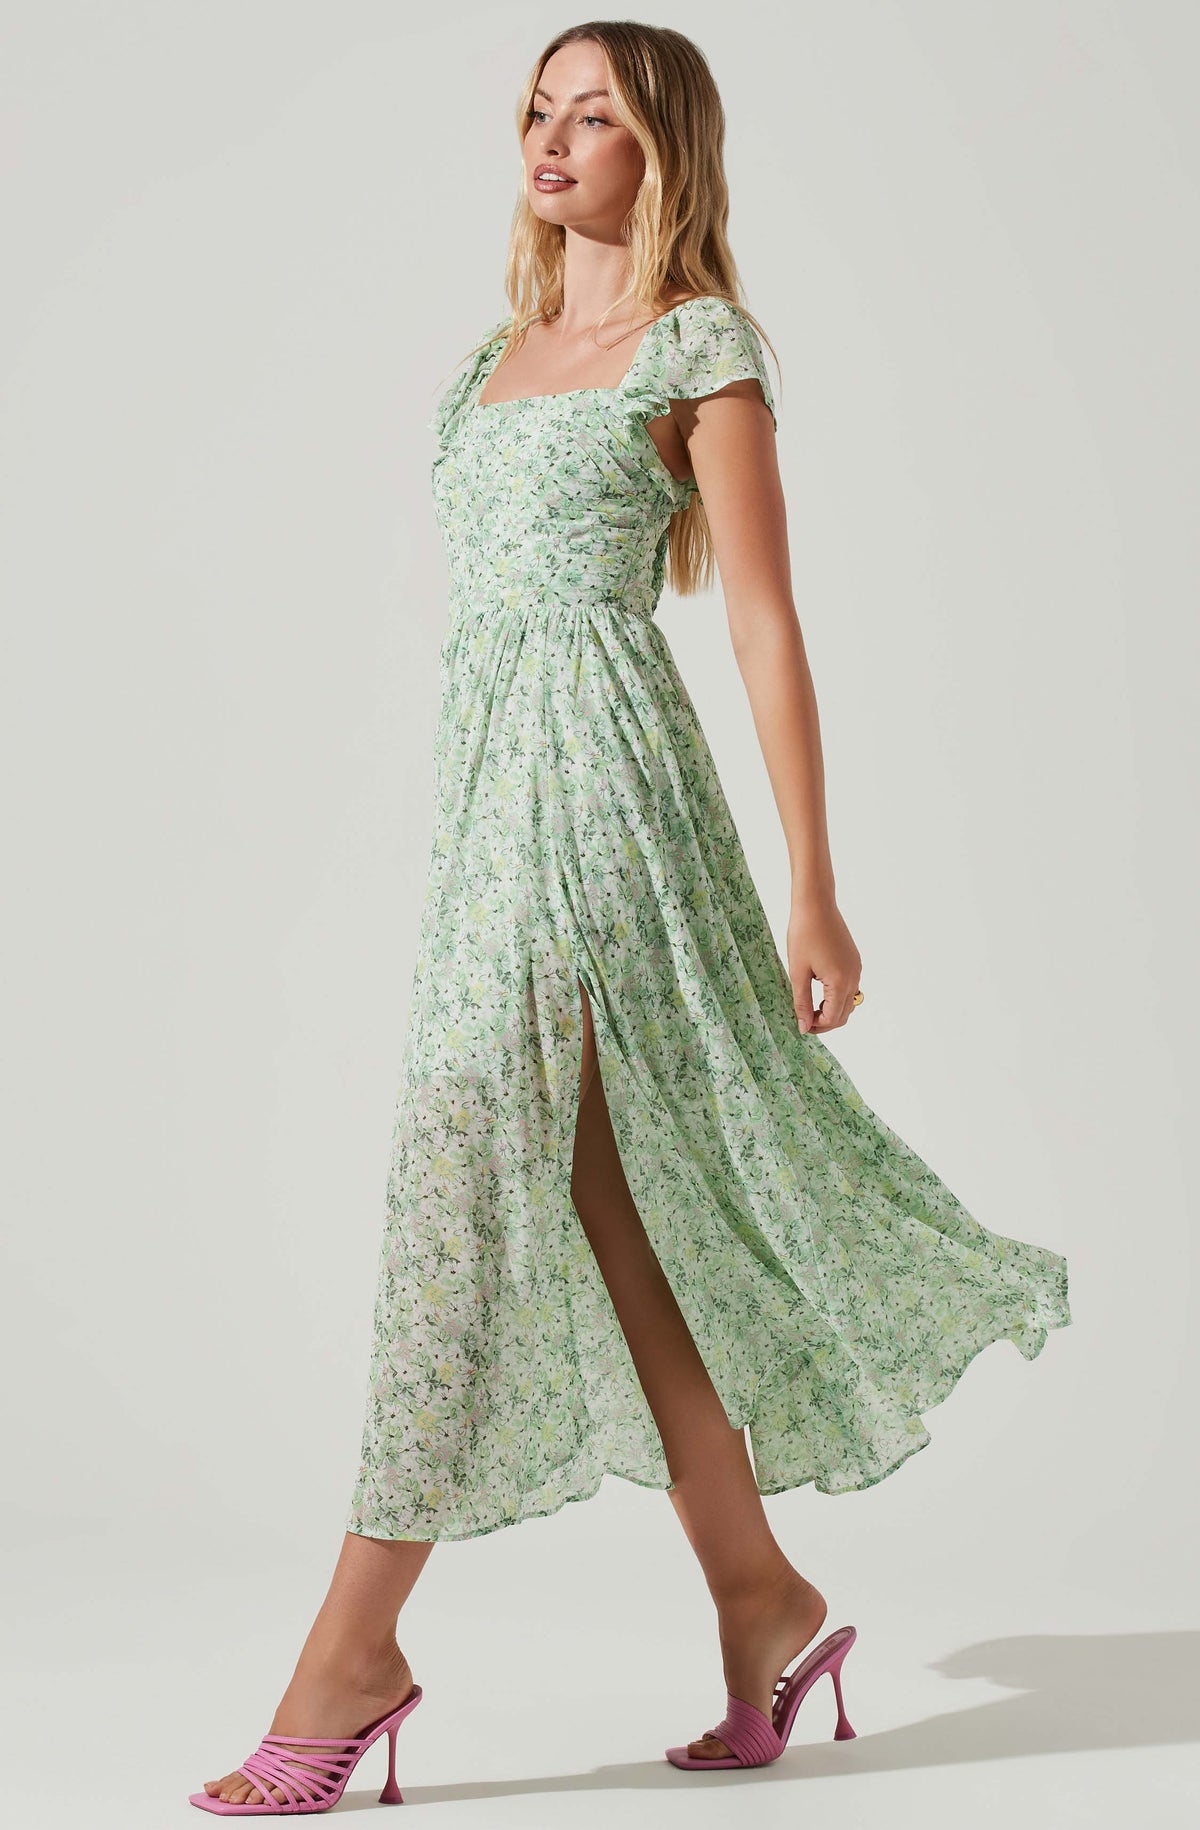 floral green dress